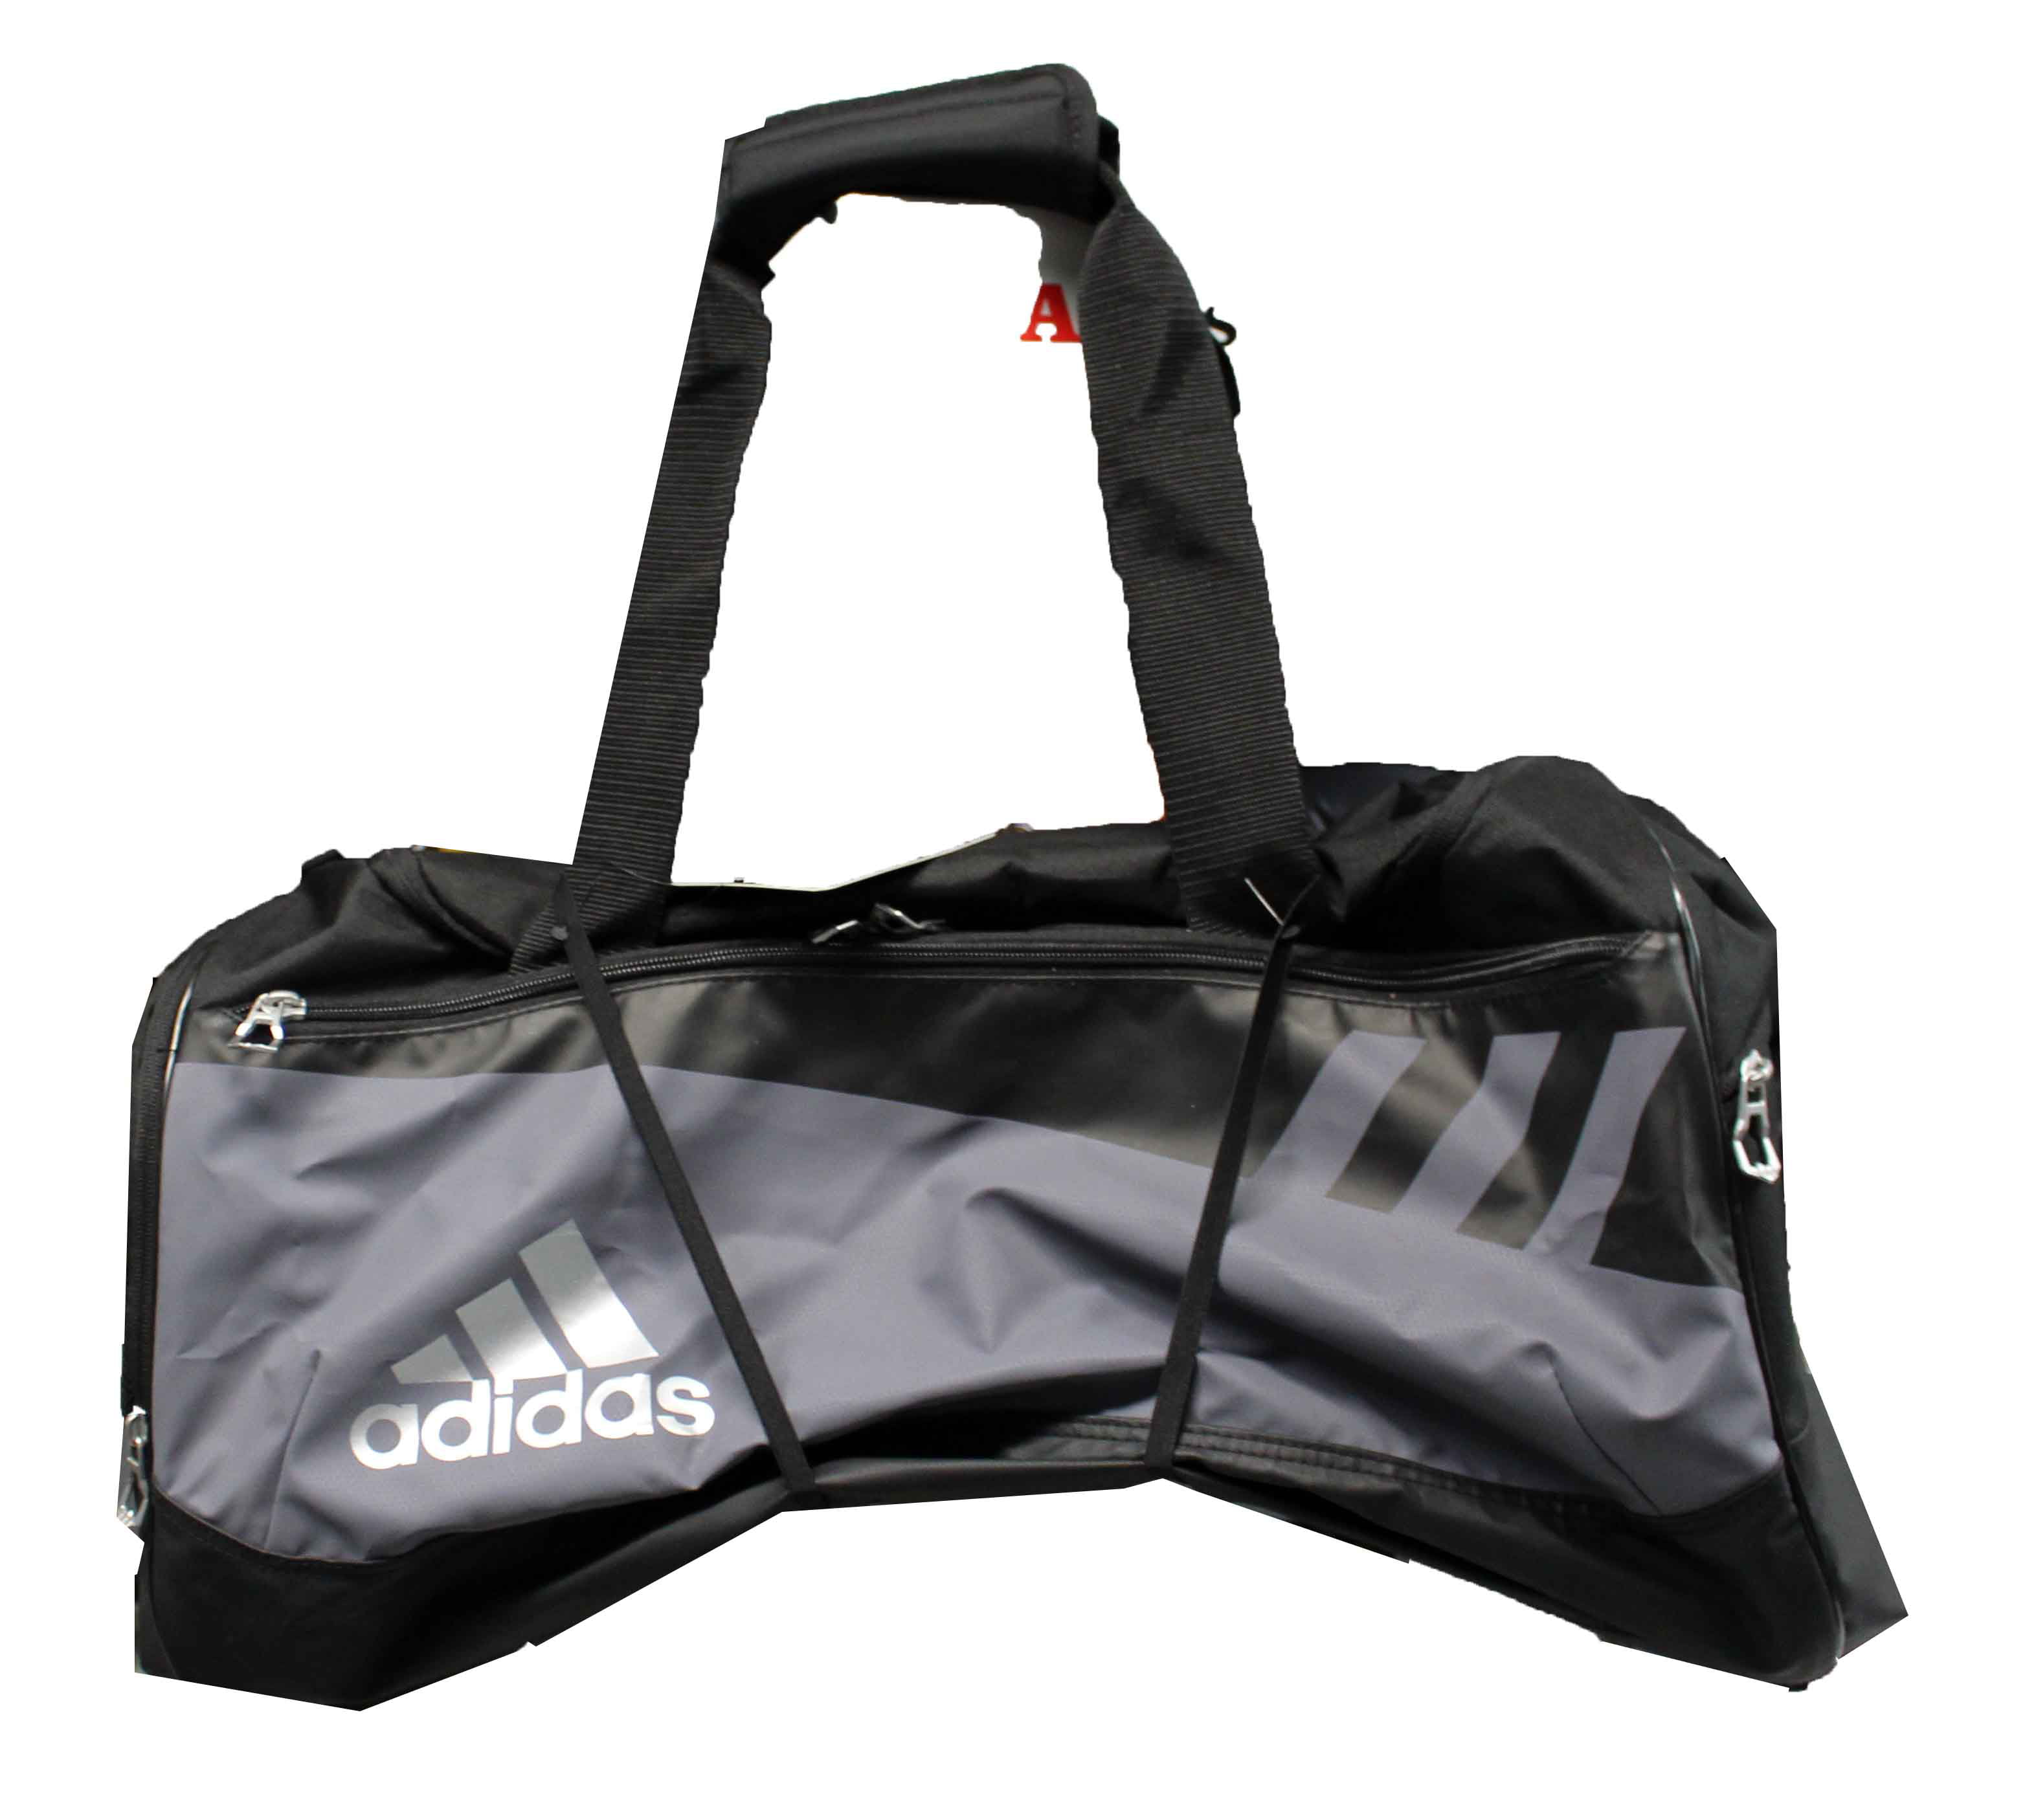 Adidas Issue Medium Duffel Bag Black/Gray -